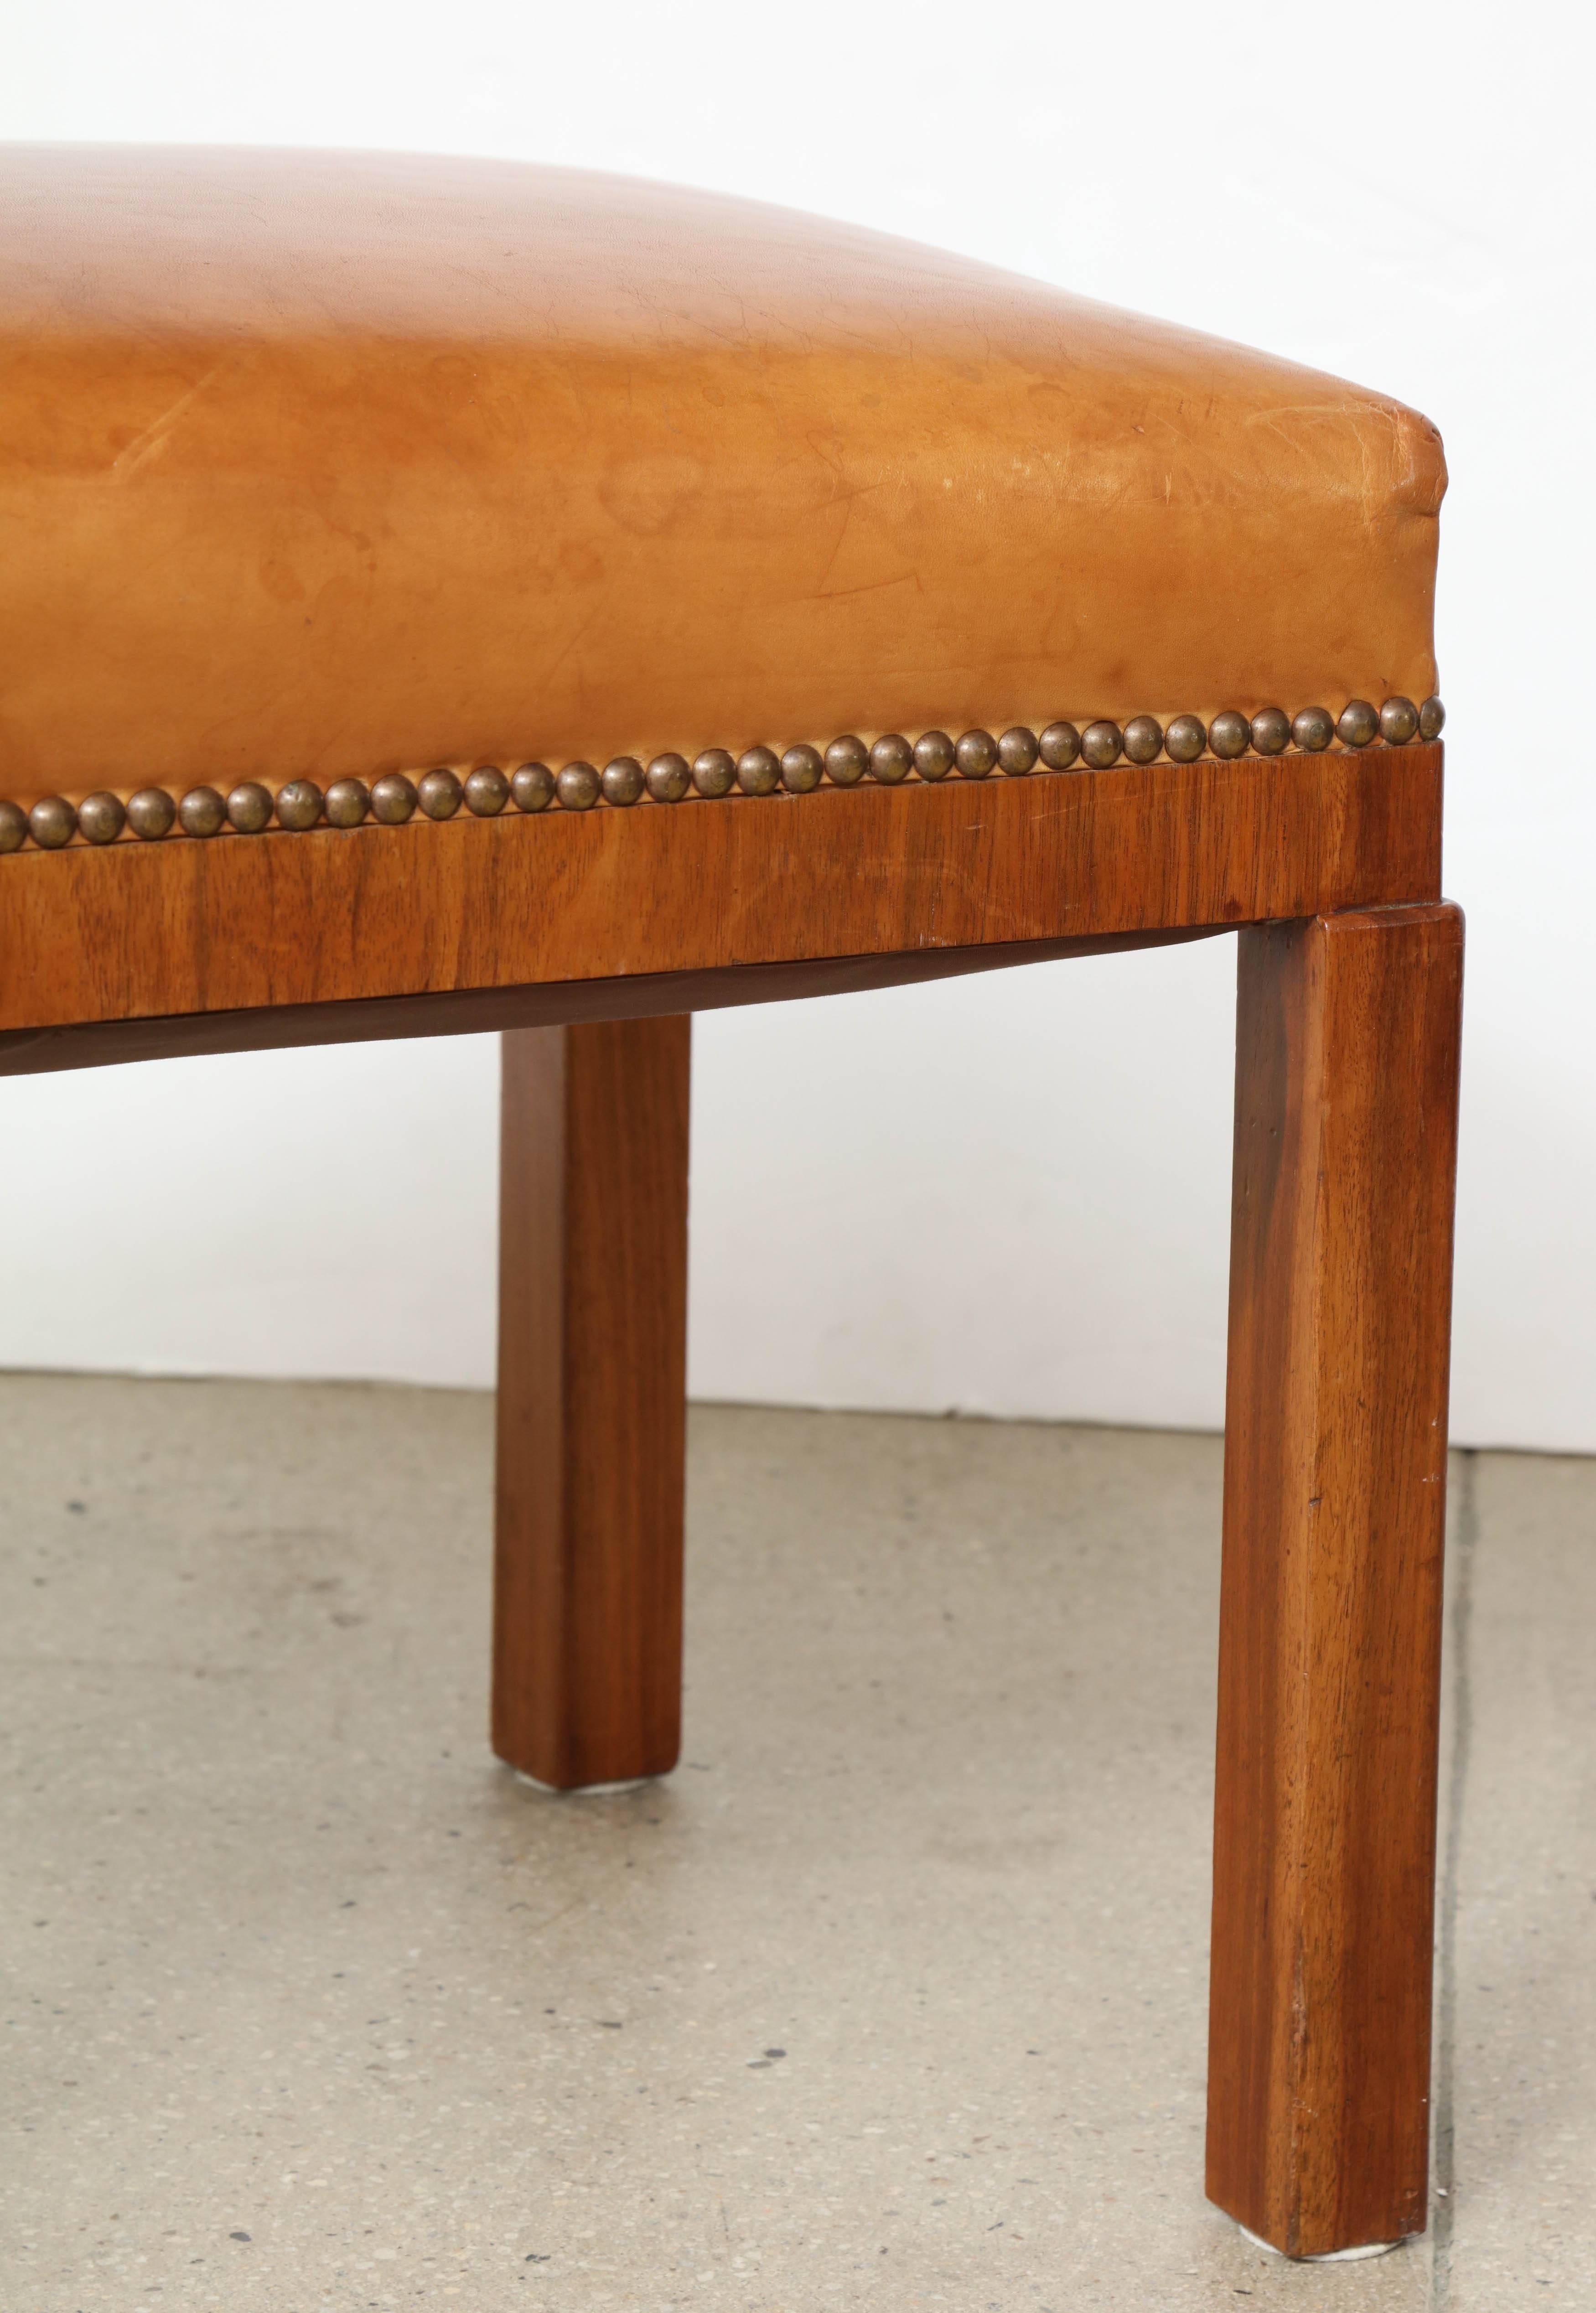 Elegant 1930s Swedish Grace figured walnut stool with beautiful original saddle hide upholstery, attributed to Erik Chambert. Very good original condition throughout.